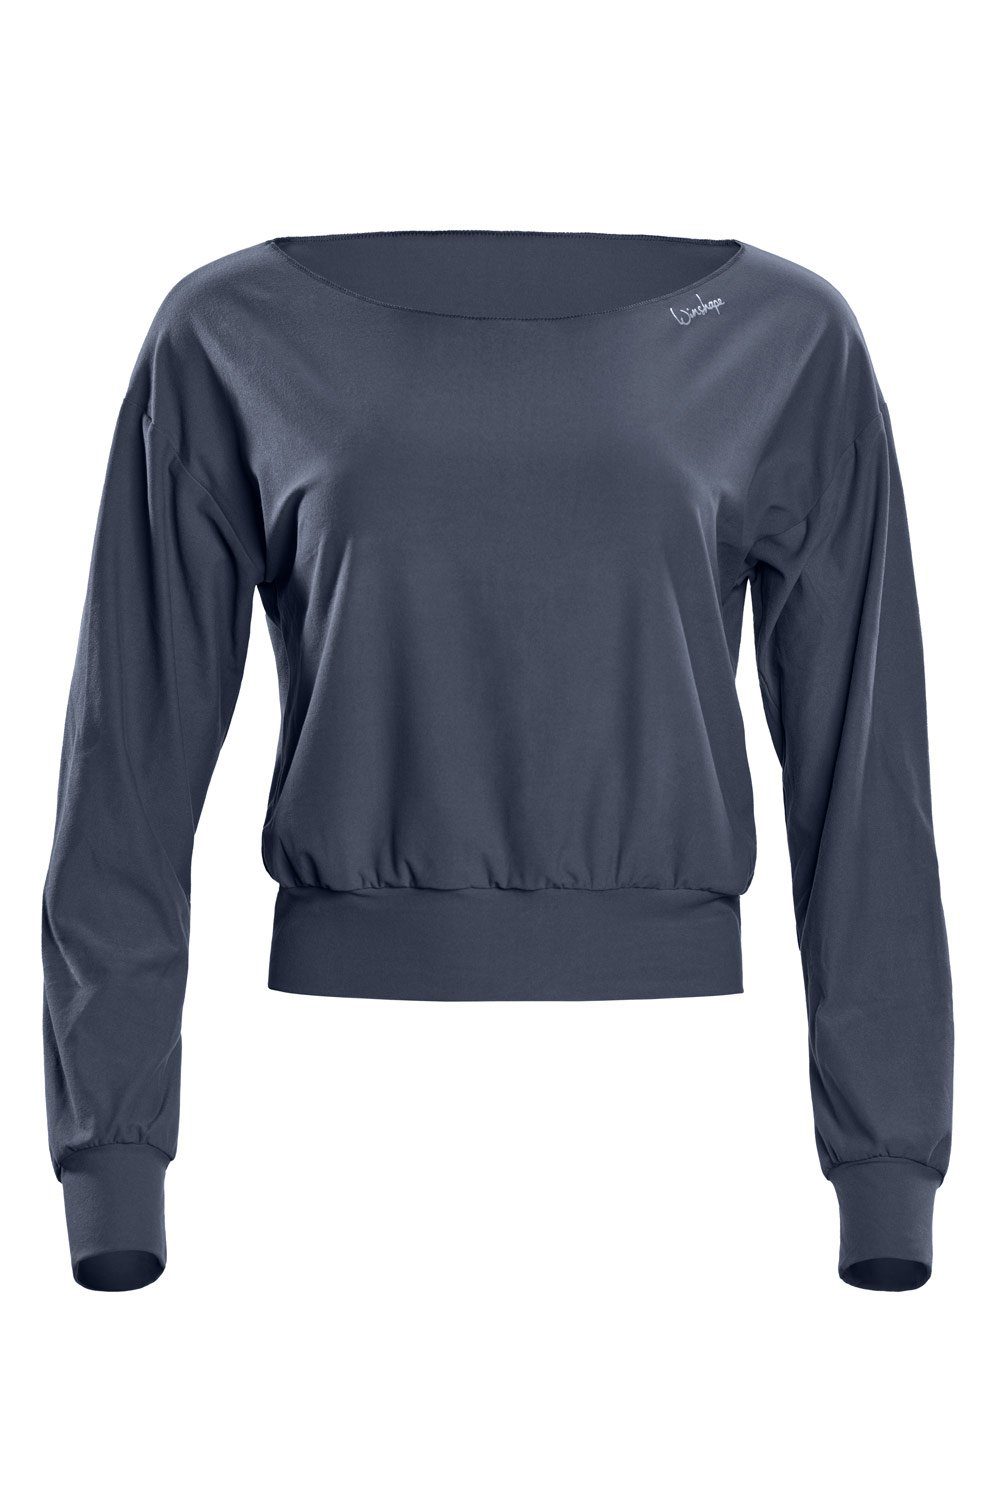 Winshape Longsleeve LS003LS Functional Light and Soft anthrazit | Shirts